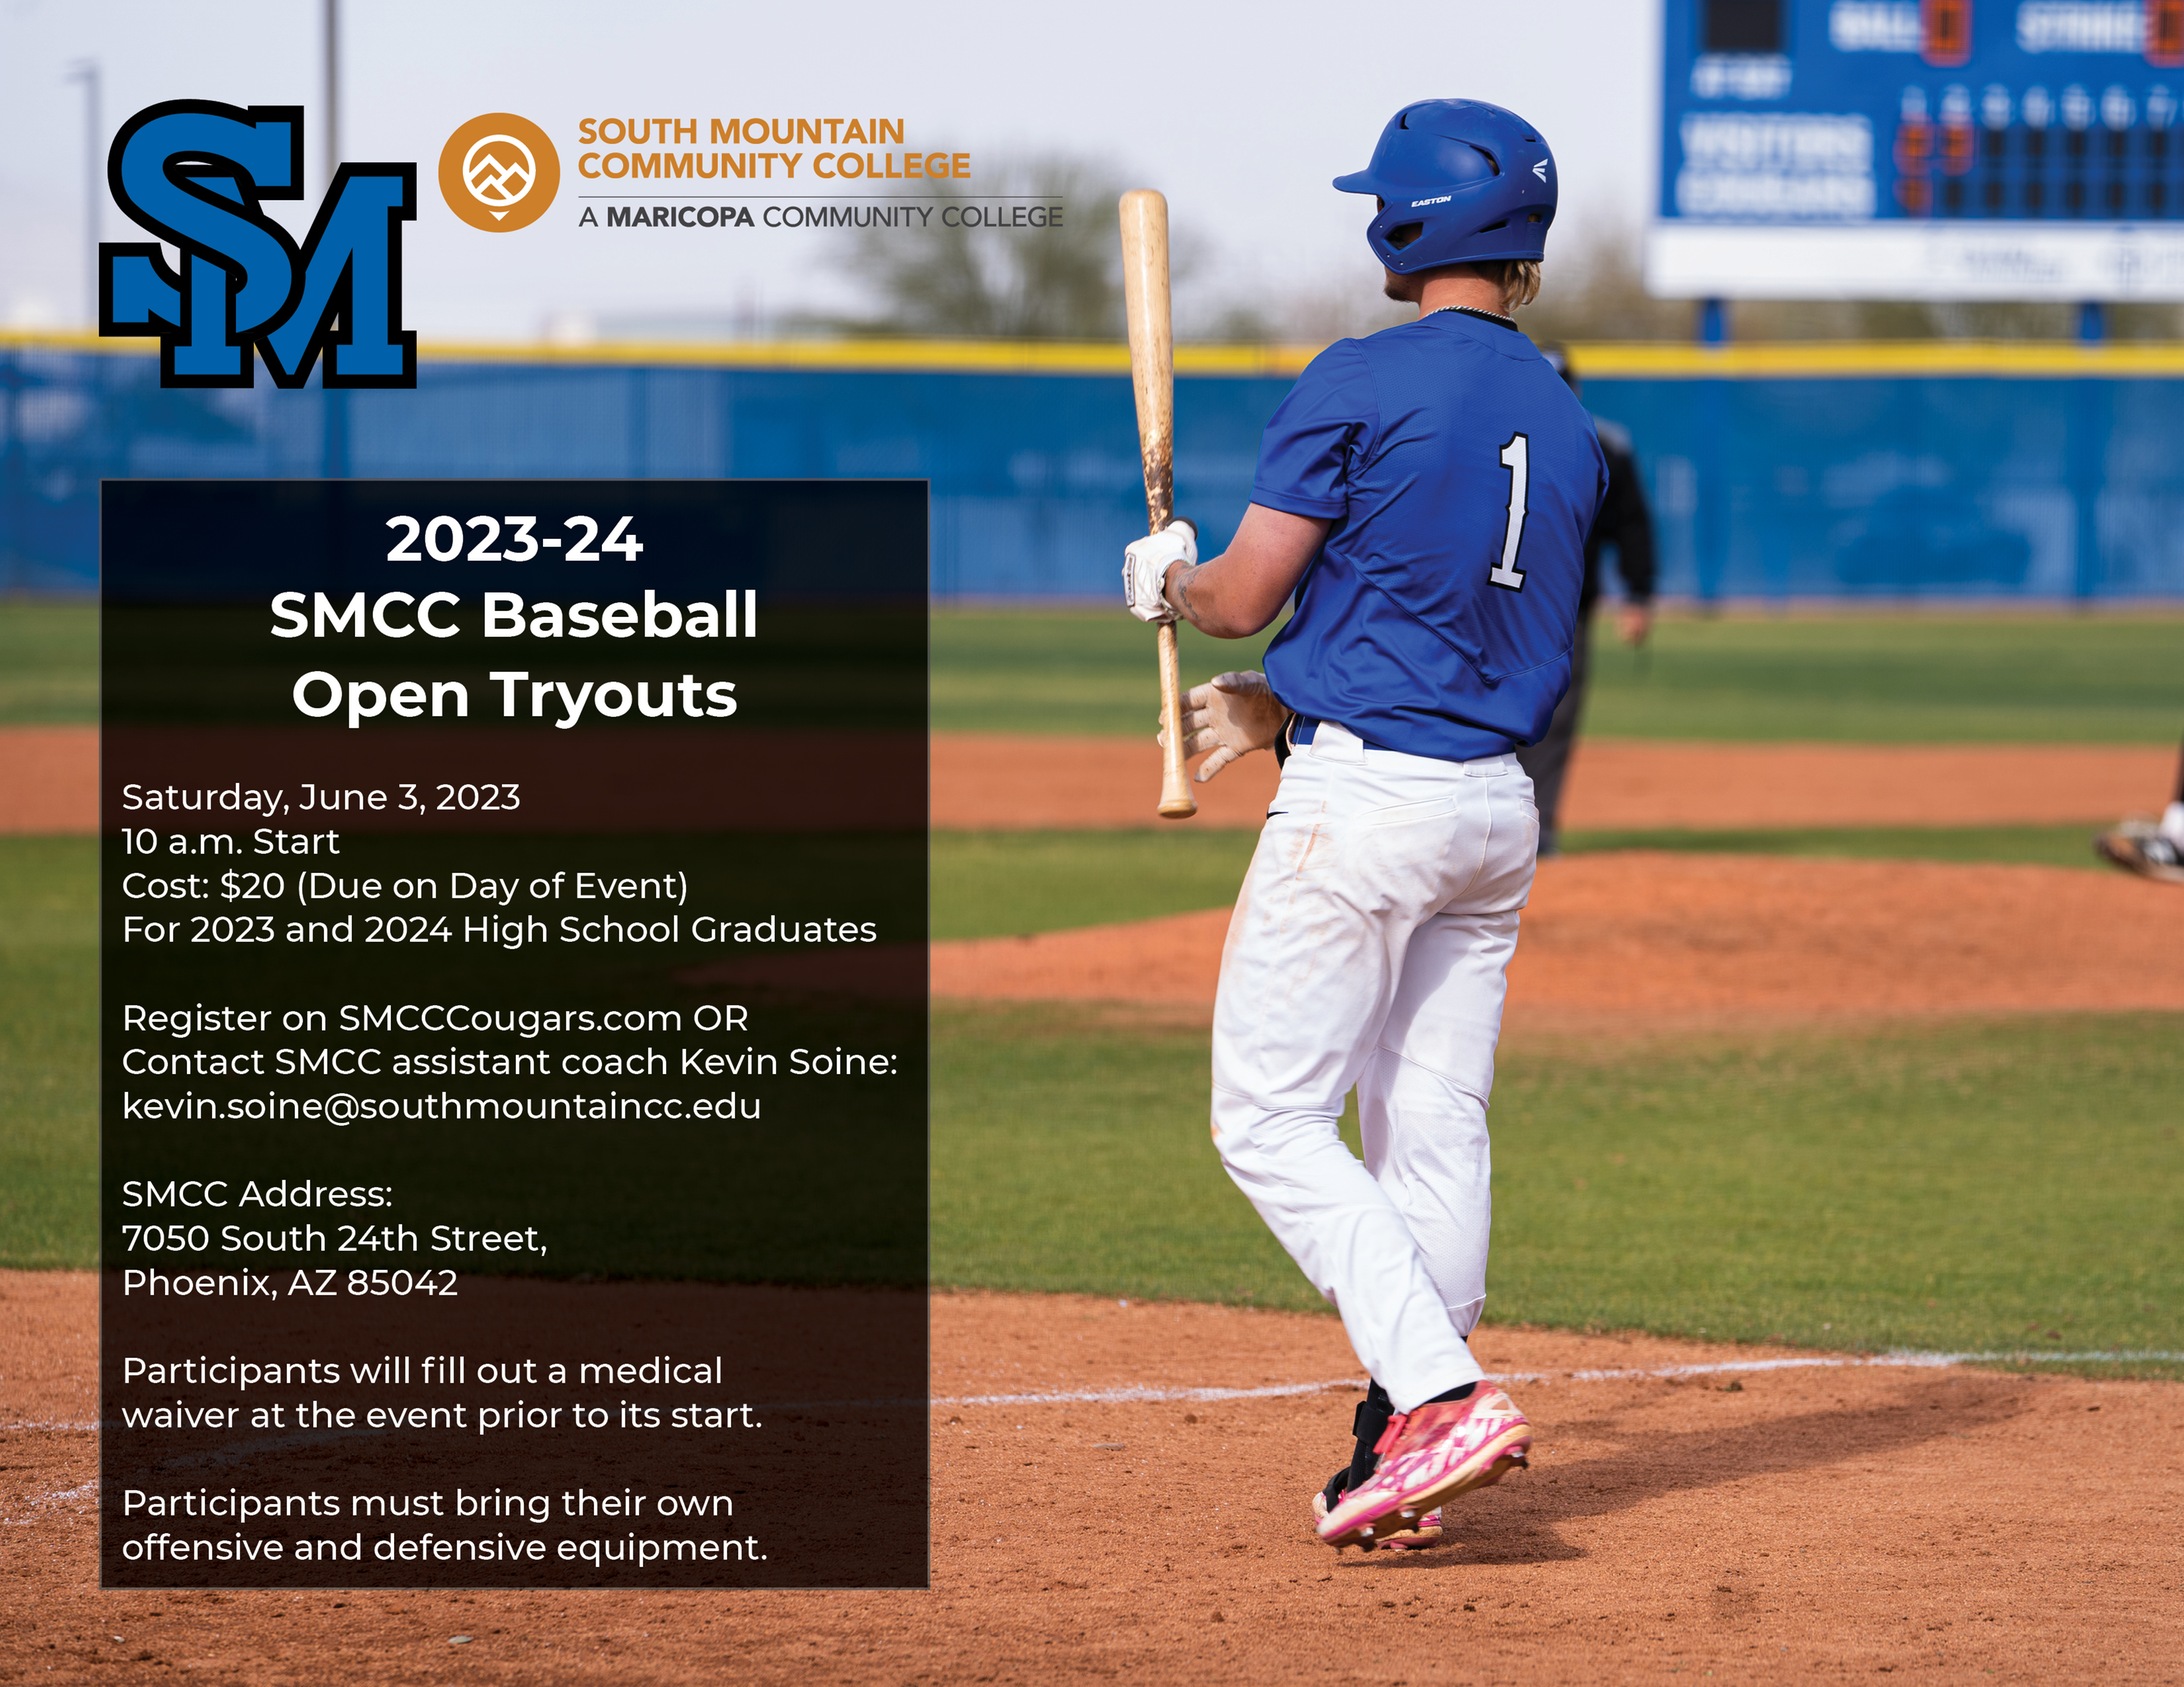 SMCC Baseball Open Tryouts Set for June 3